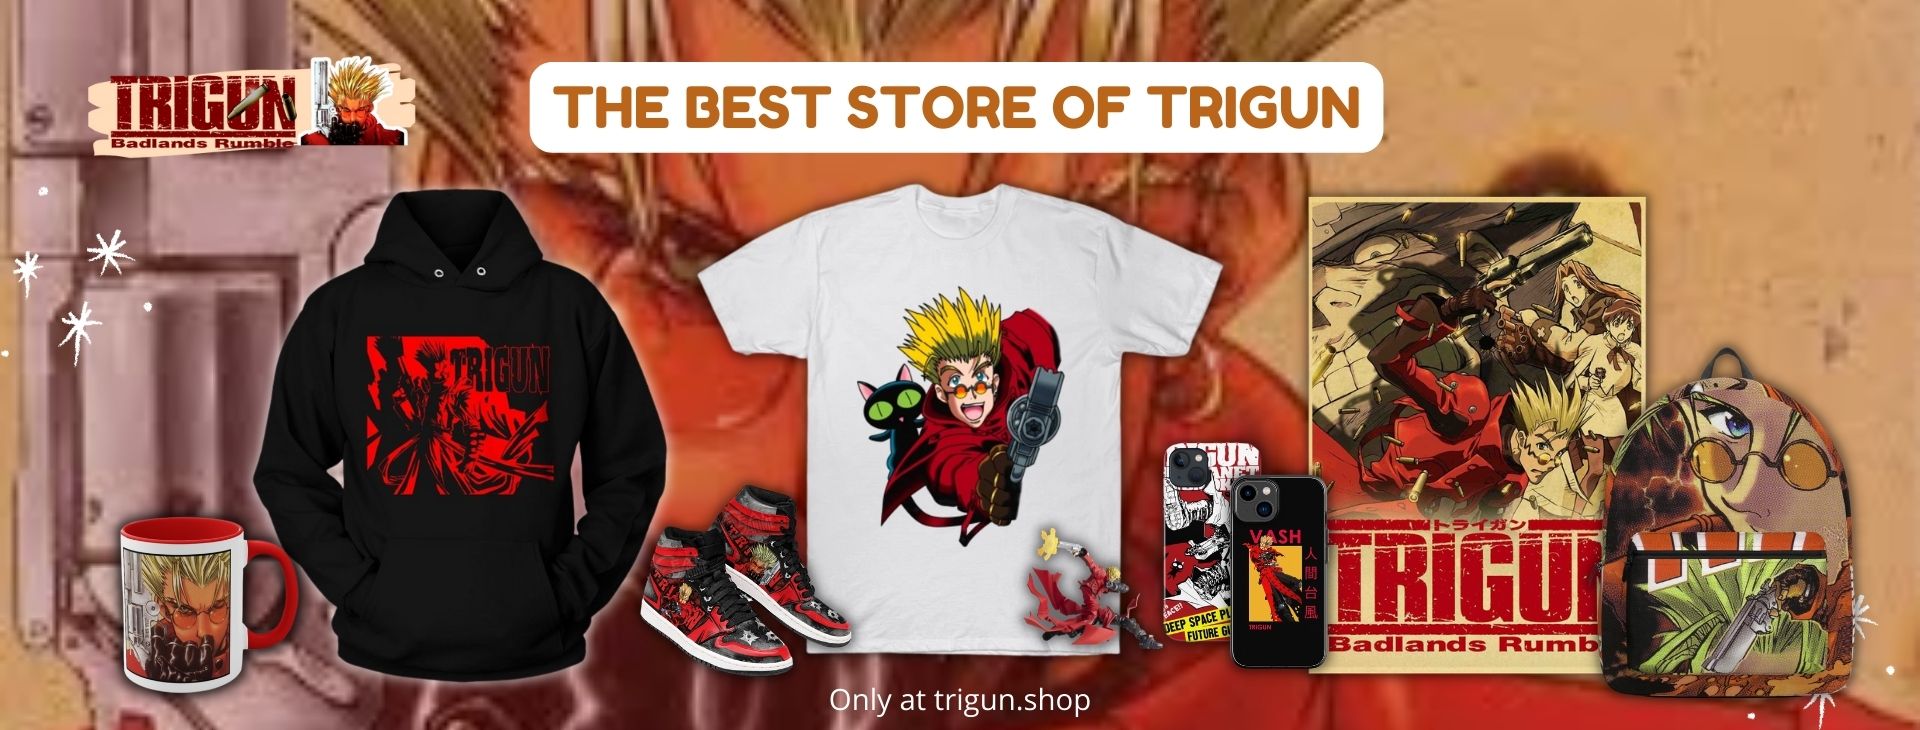 Trigun Banner - Trigun Shop